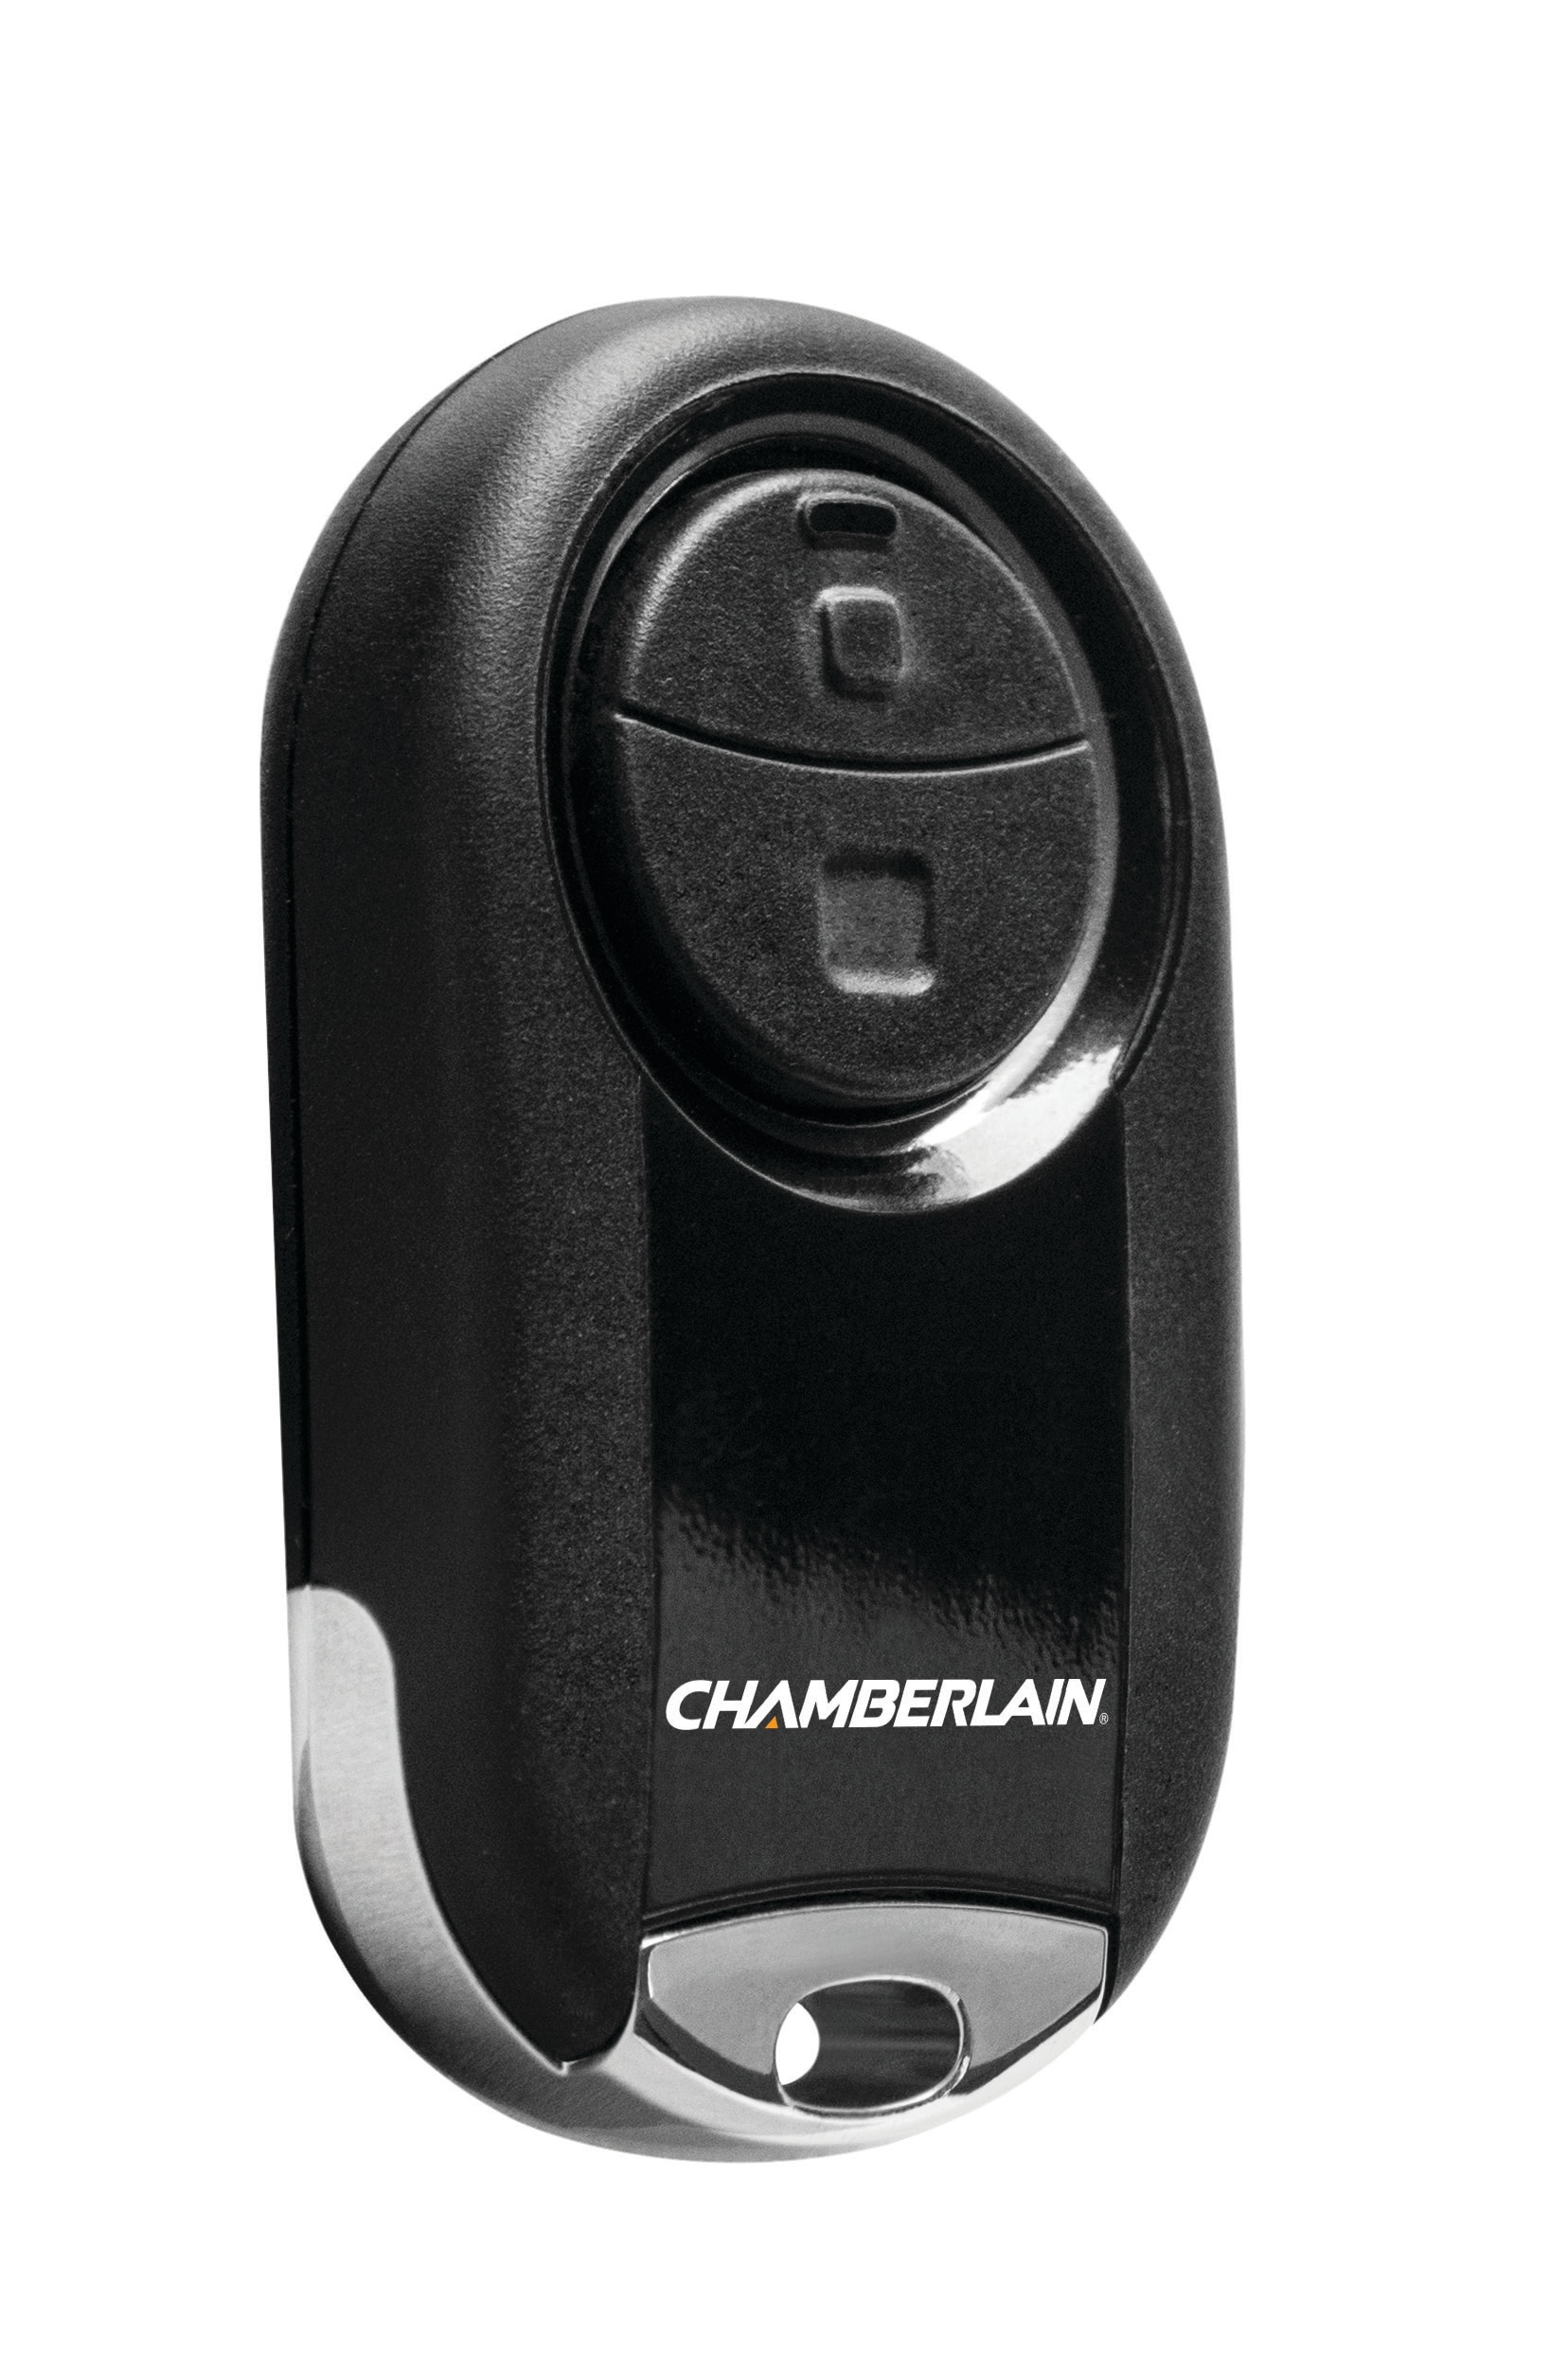 Chamberlain Universal 2-Button Keychain Garage Door Opener Remote in the Garage  Door Opener Remotes department at